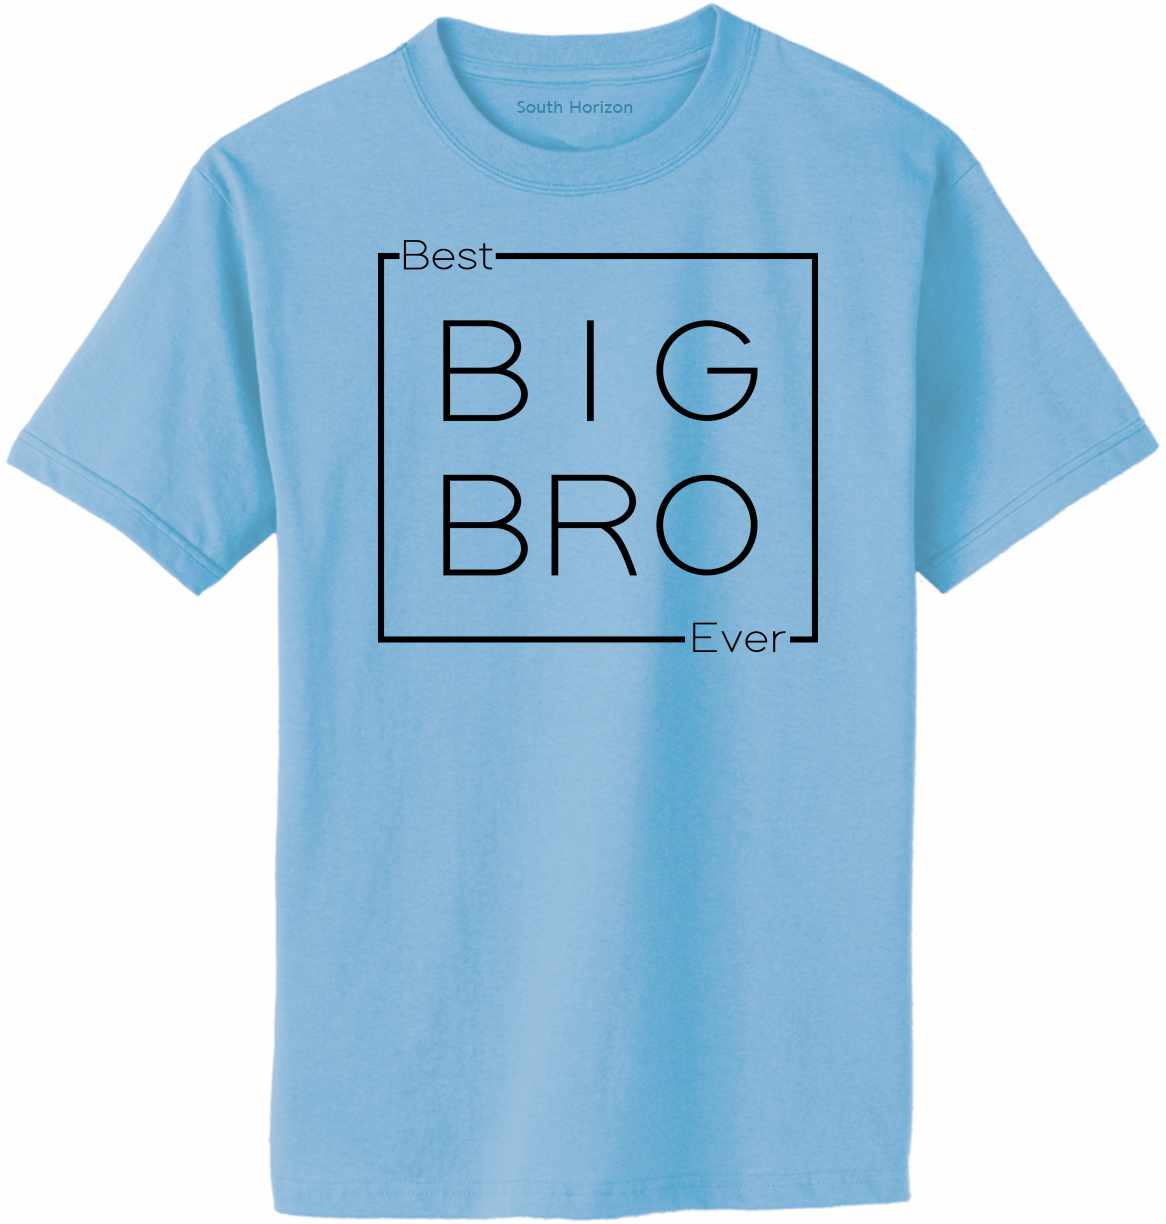 Best Big Bro Ever - Big Brother - Box on Adult T-Shirt